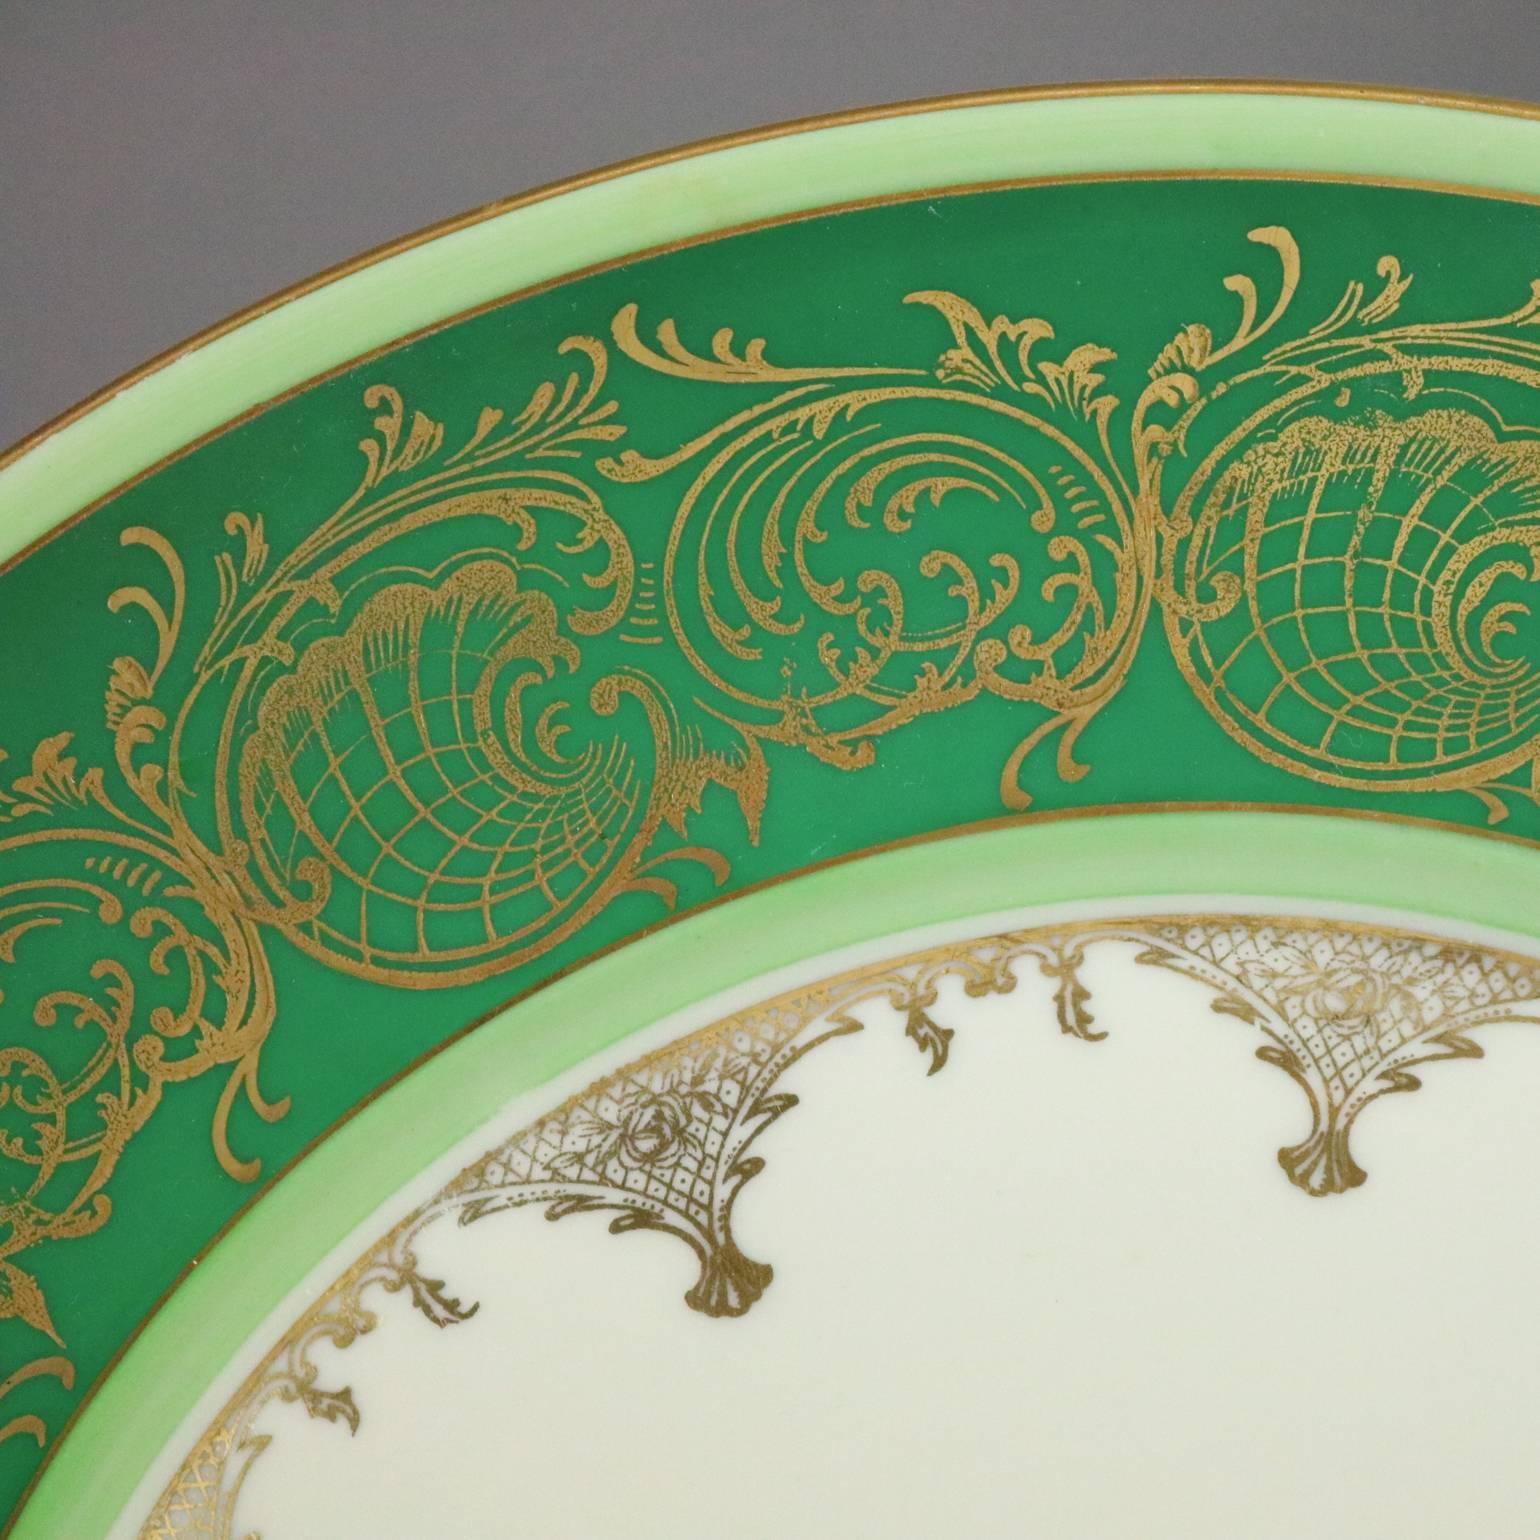 Set of eight antique Bavarian dinner plates feature emerald green border with gold gilt scrolled rinceaux decoration, en verso green shield maker mark "Schwarzenhammer, Germany", circa 1890

Measure: 11" D.